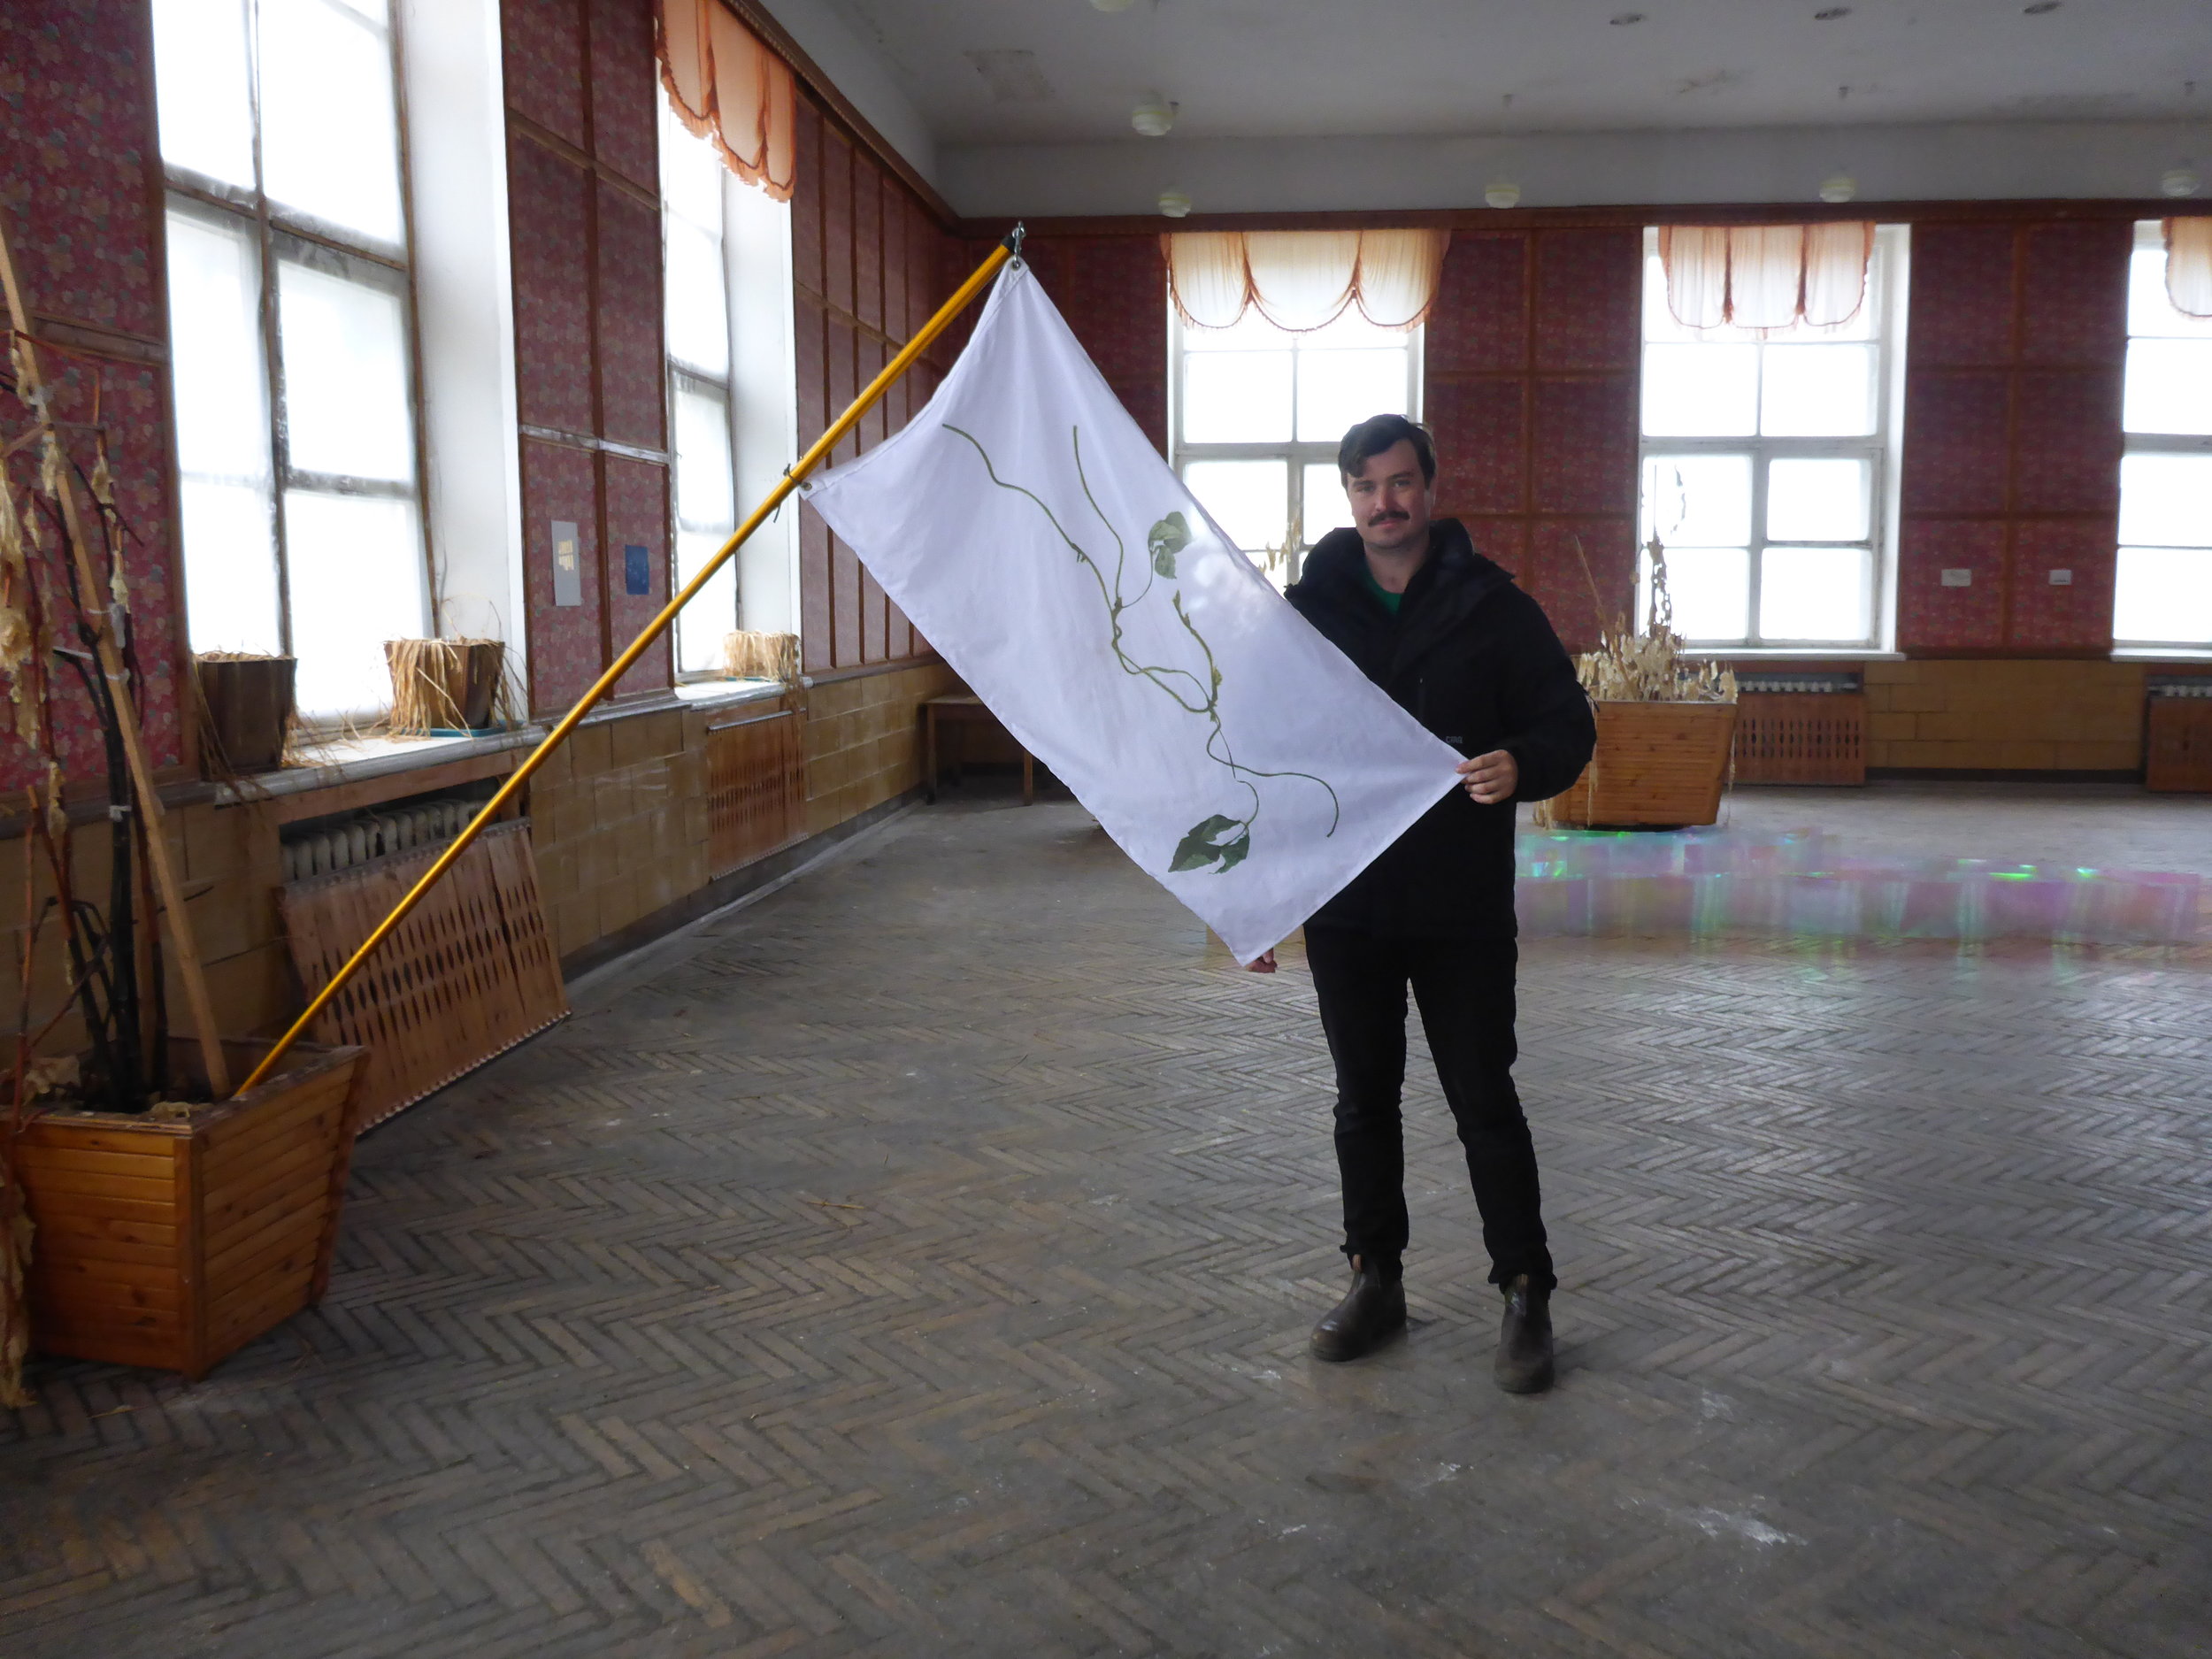  Stephan Jahanshahi, &nbsp;Printed nylon flag, aluminum pole, hardware,&nbsp;Pyramiden Canteen, Svalbard, Norway, July 2016 